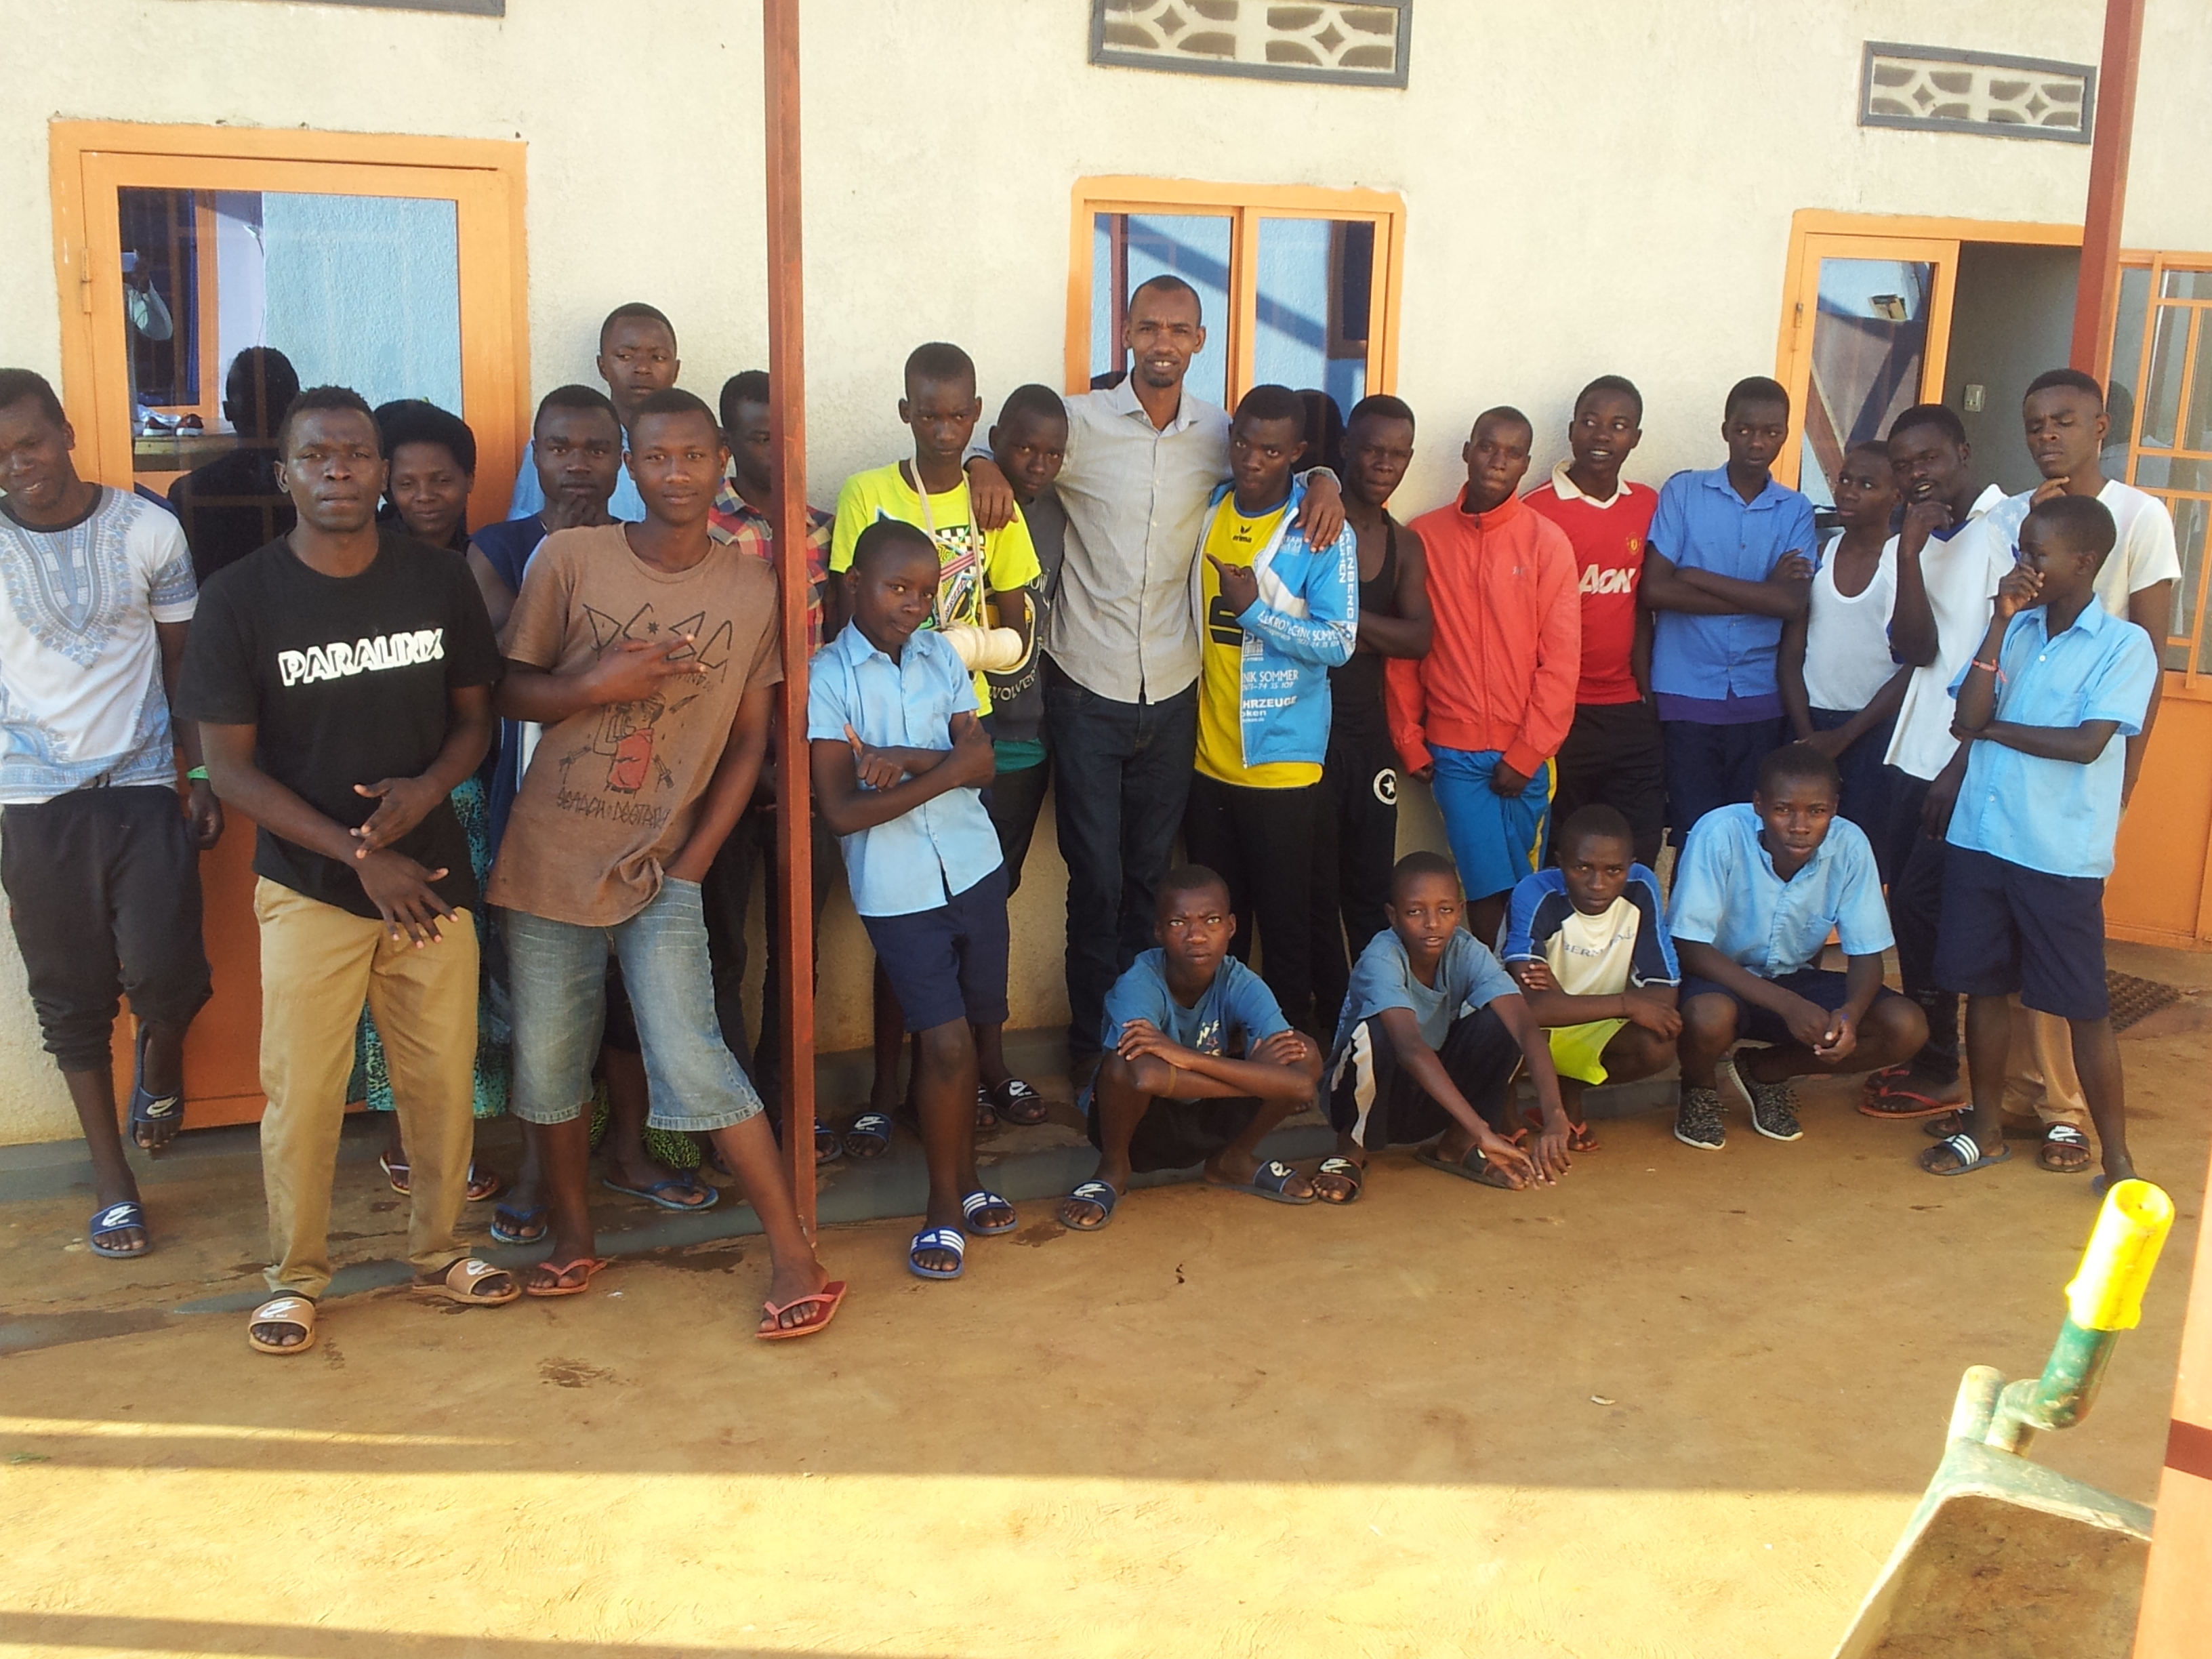 How Ruzindana ‘Fathered’ Over 20 Former Street Children